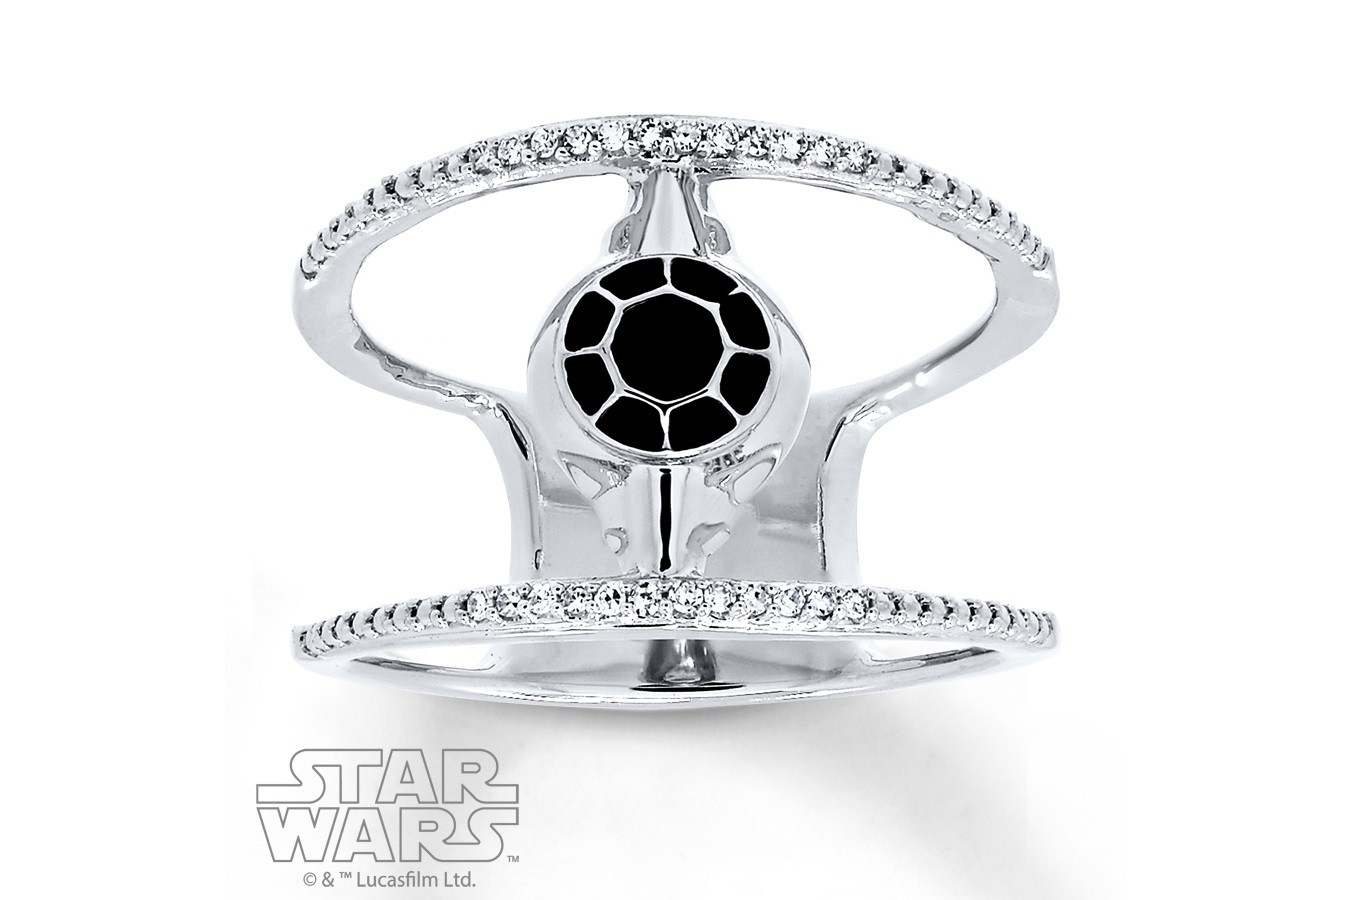 New Kay Jewelers x Star Wars Diamond rings